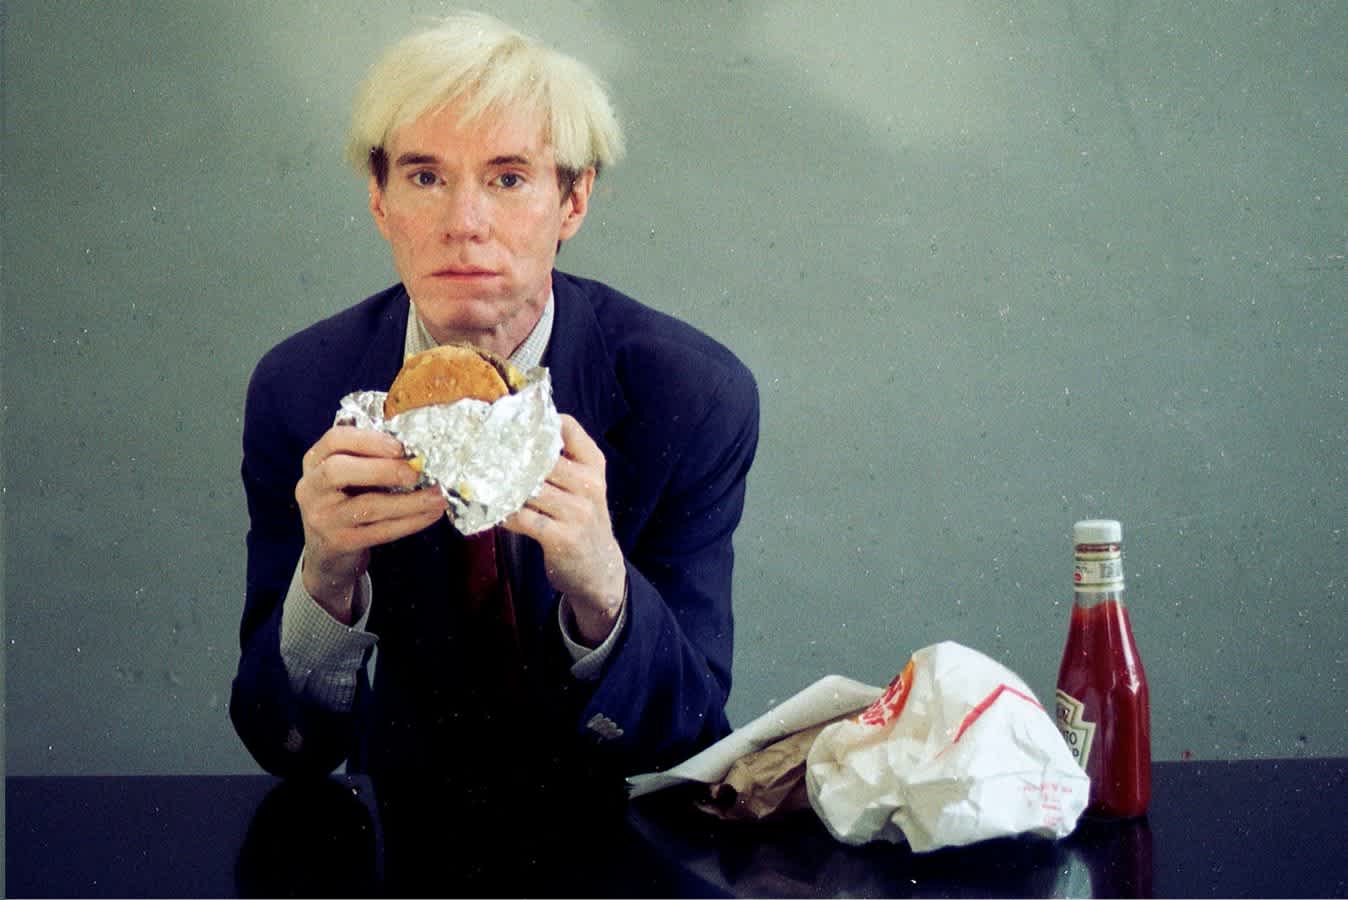 Image 7- Andy Warhol